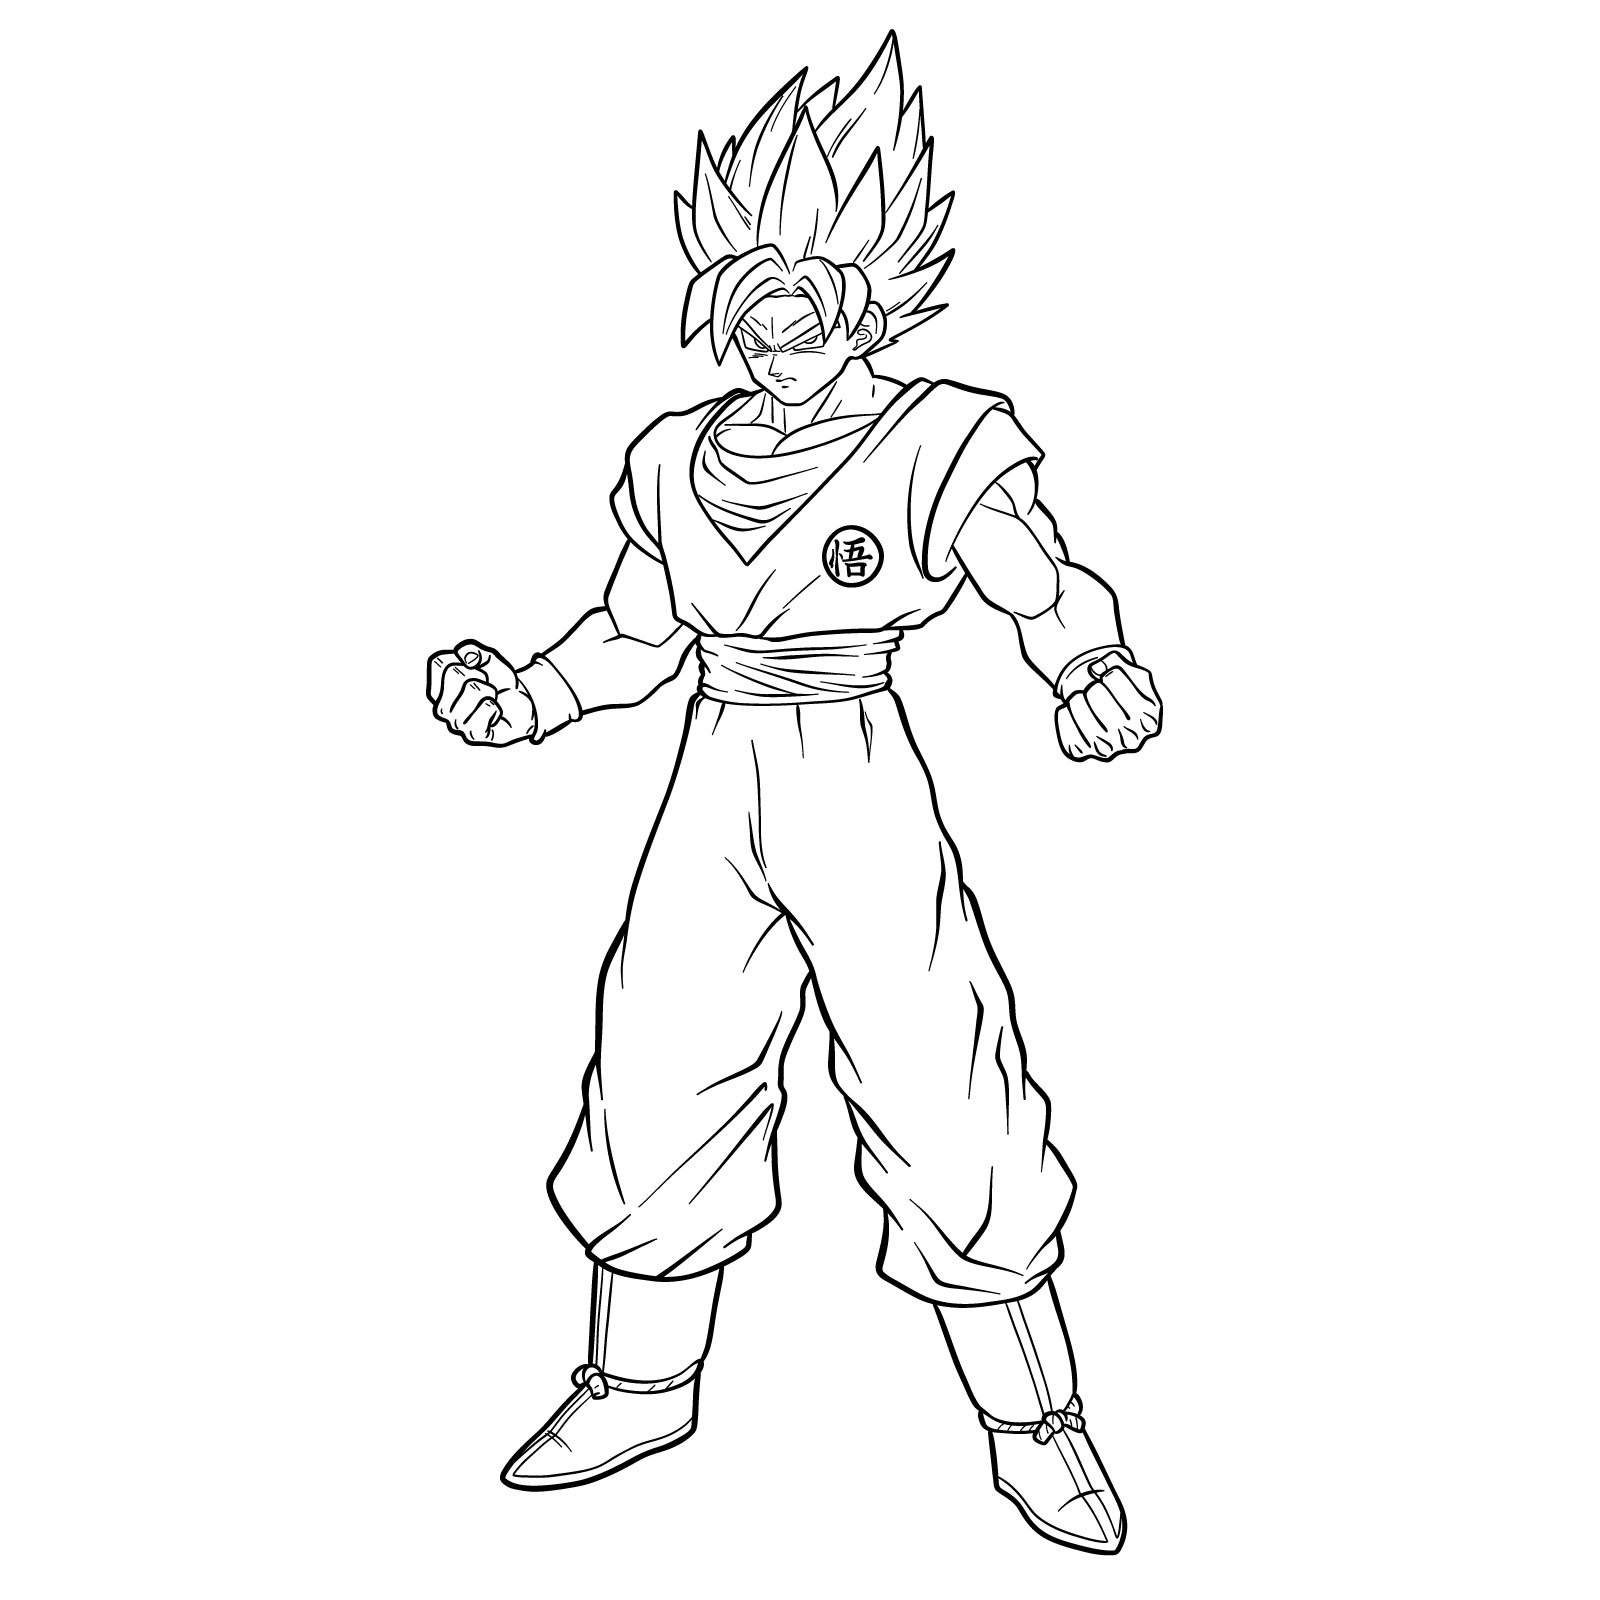 How to draw Goku in Super Saiyan form - final step